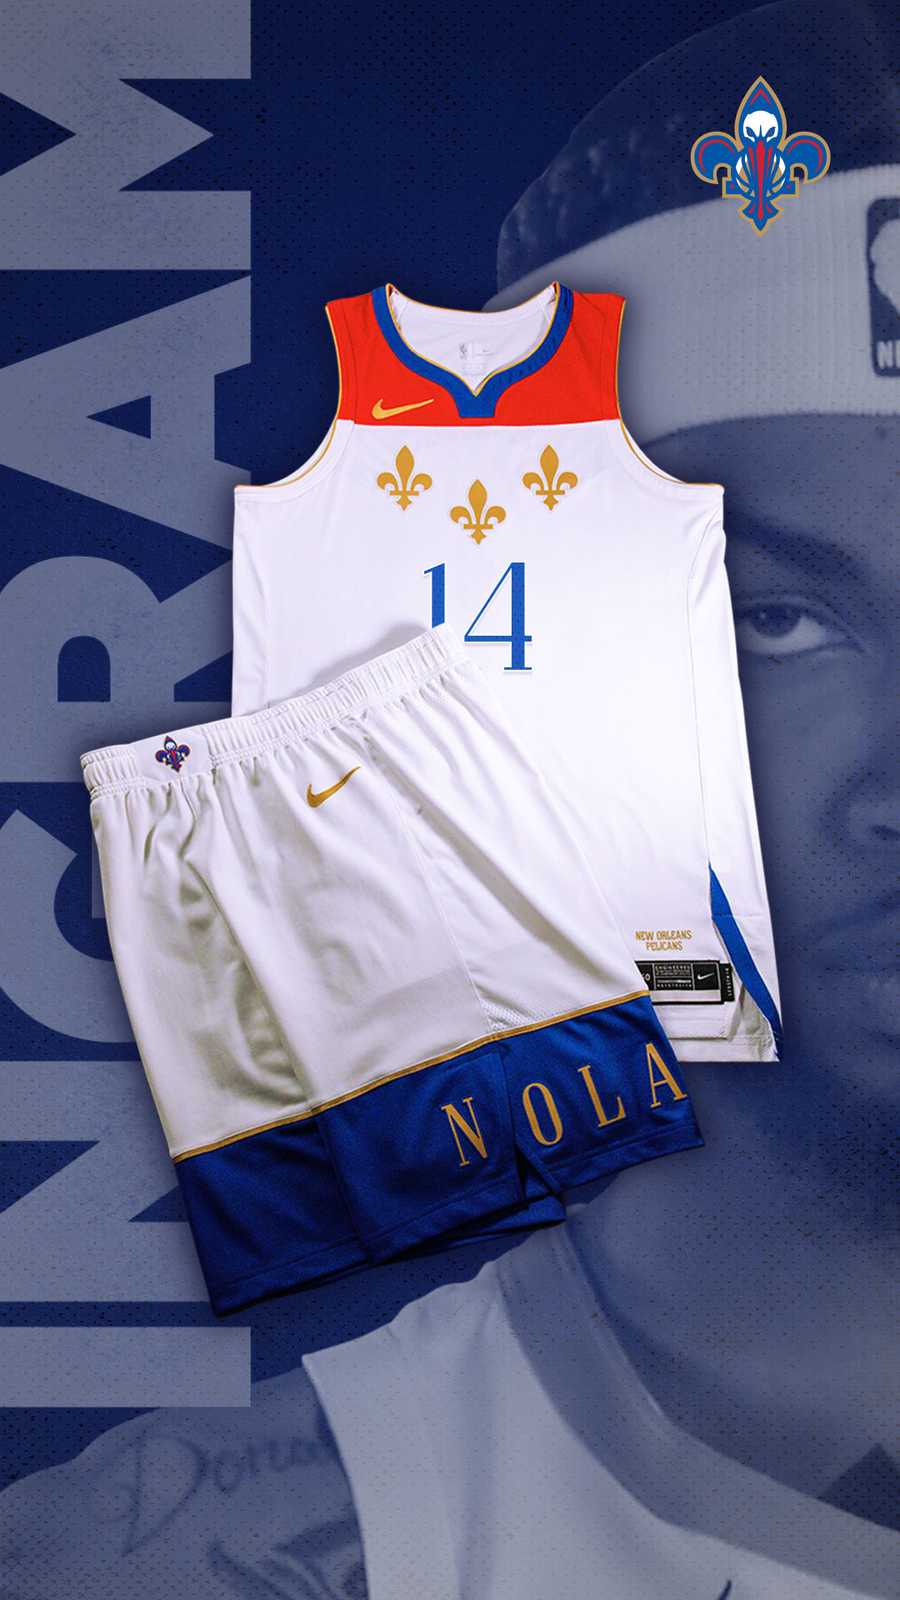 Pelicans unveil new uniforms - Sports Illustrated